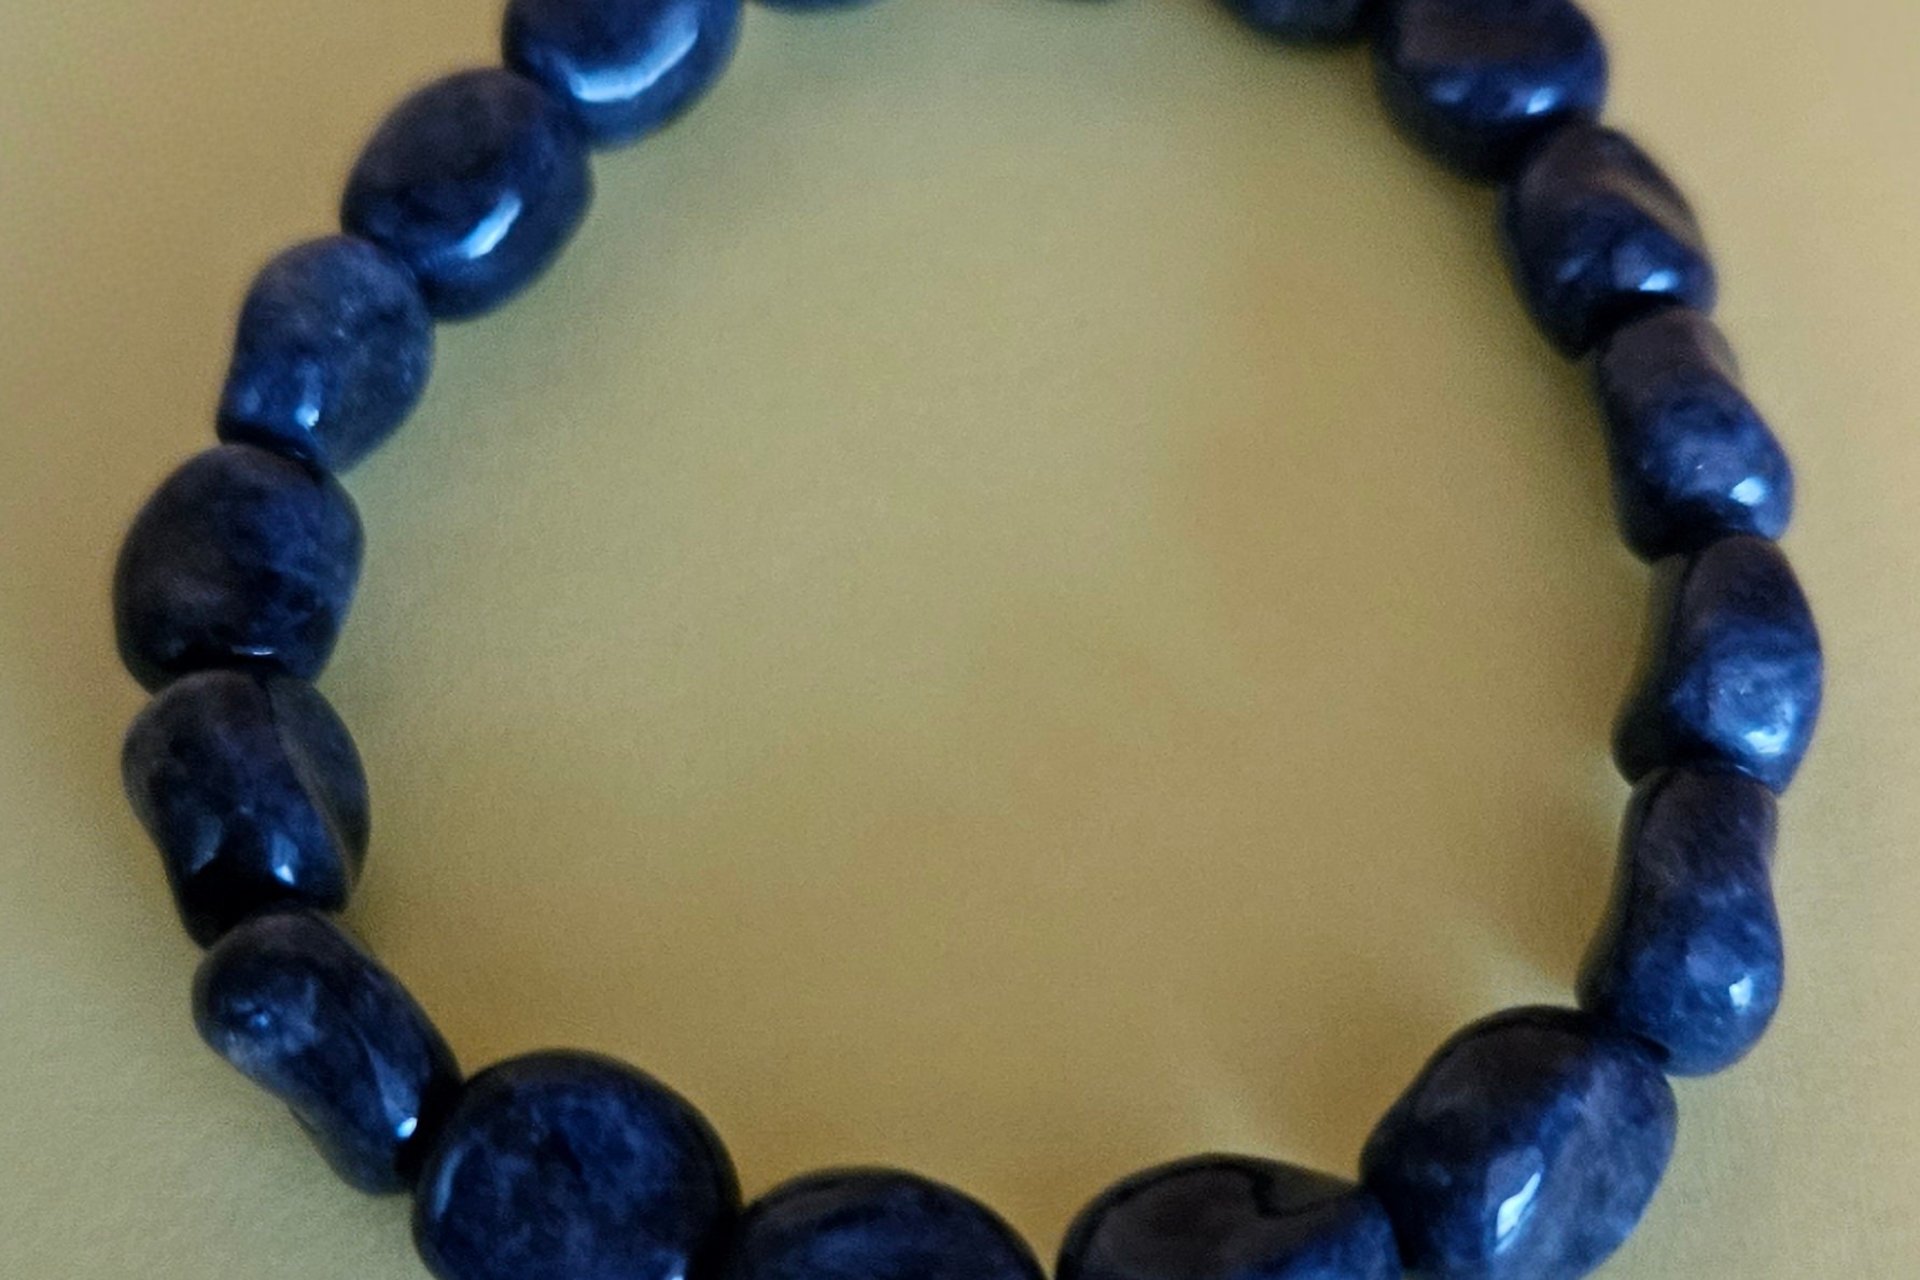 Genuine Sapphire Nugget Bracelet